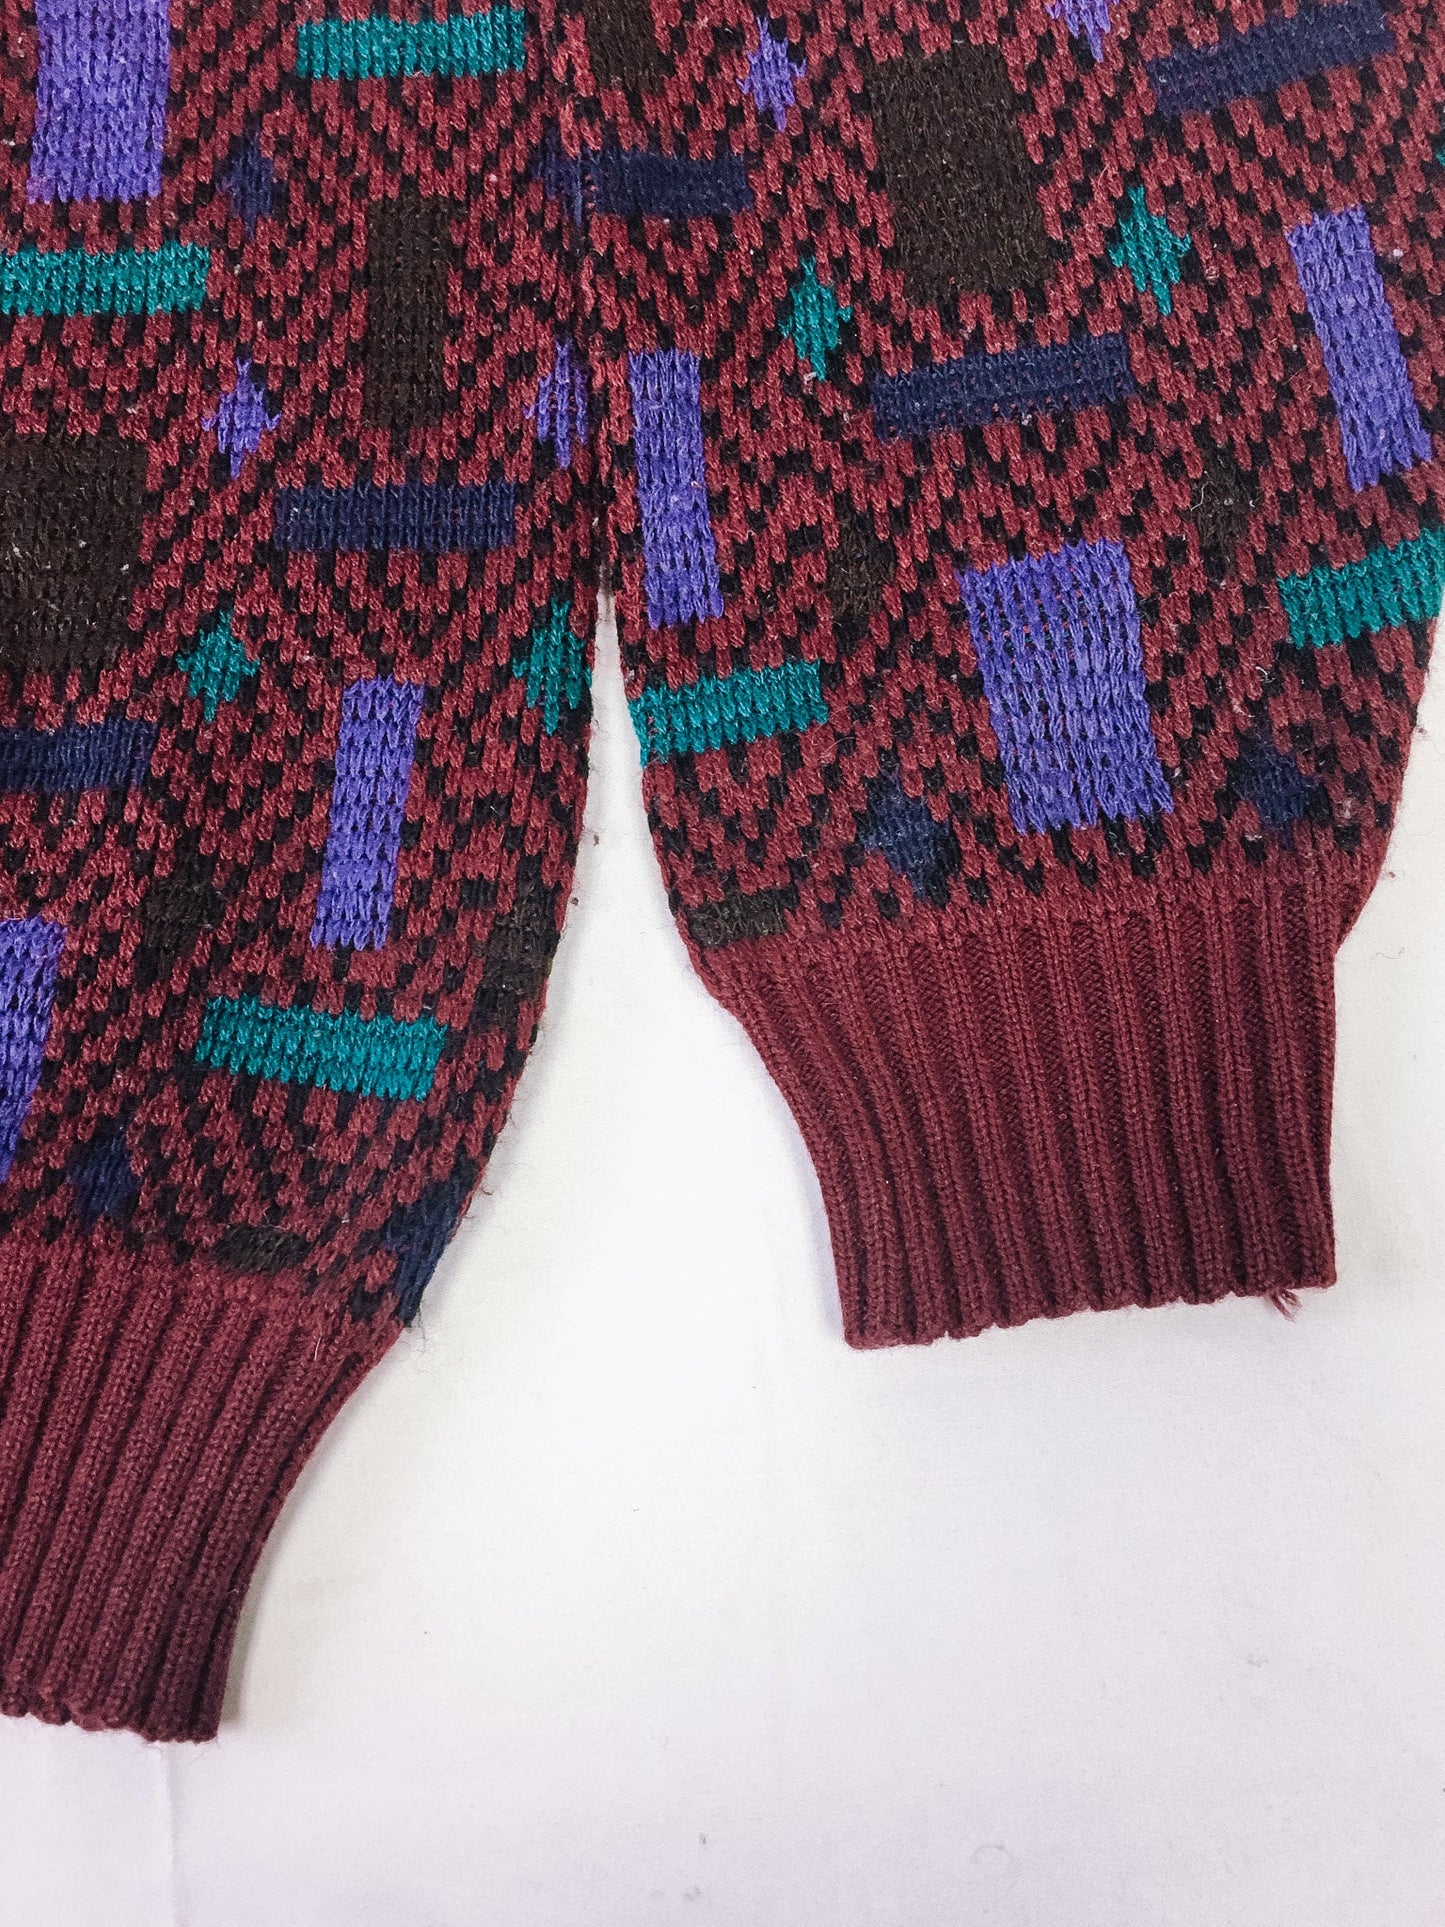 Vintage 1980s Sweater Graphix Burgundy Geometric Print Sweater, 80s Crewneck Grandpa Sweater, Sz. L, Made in USA